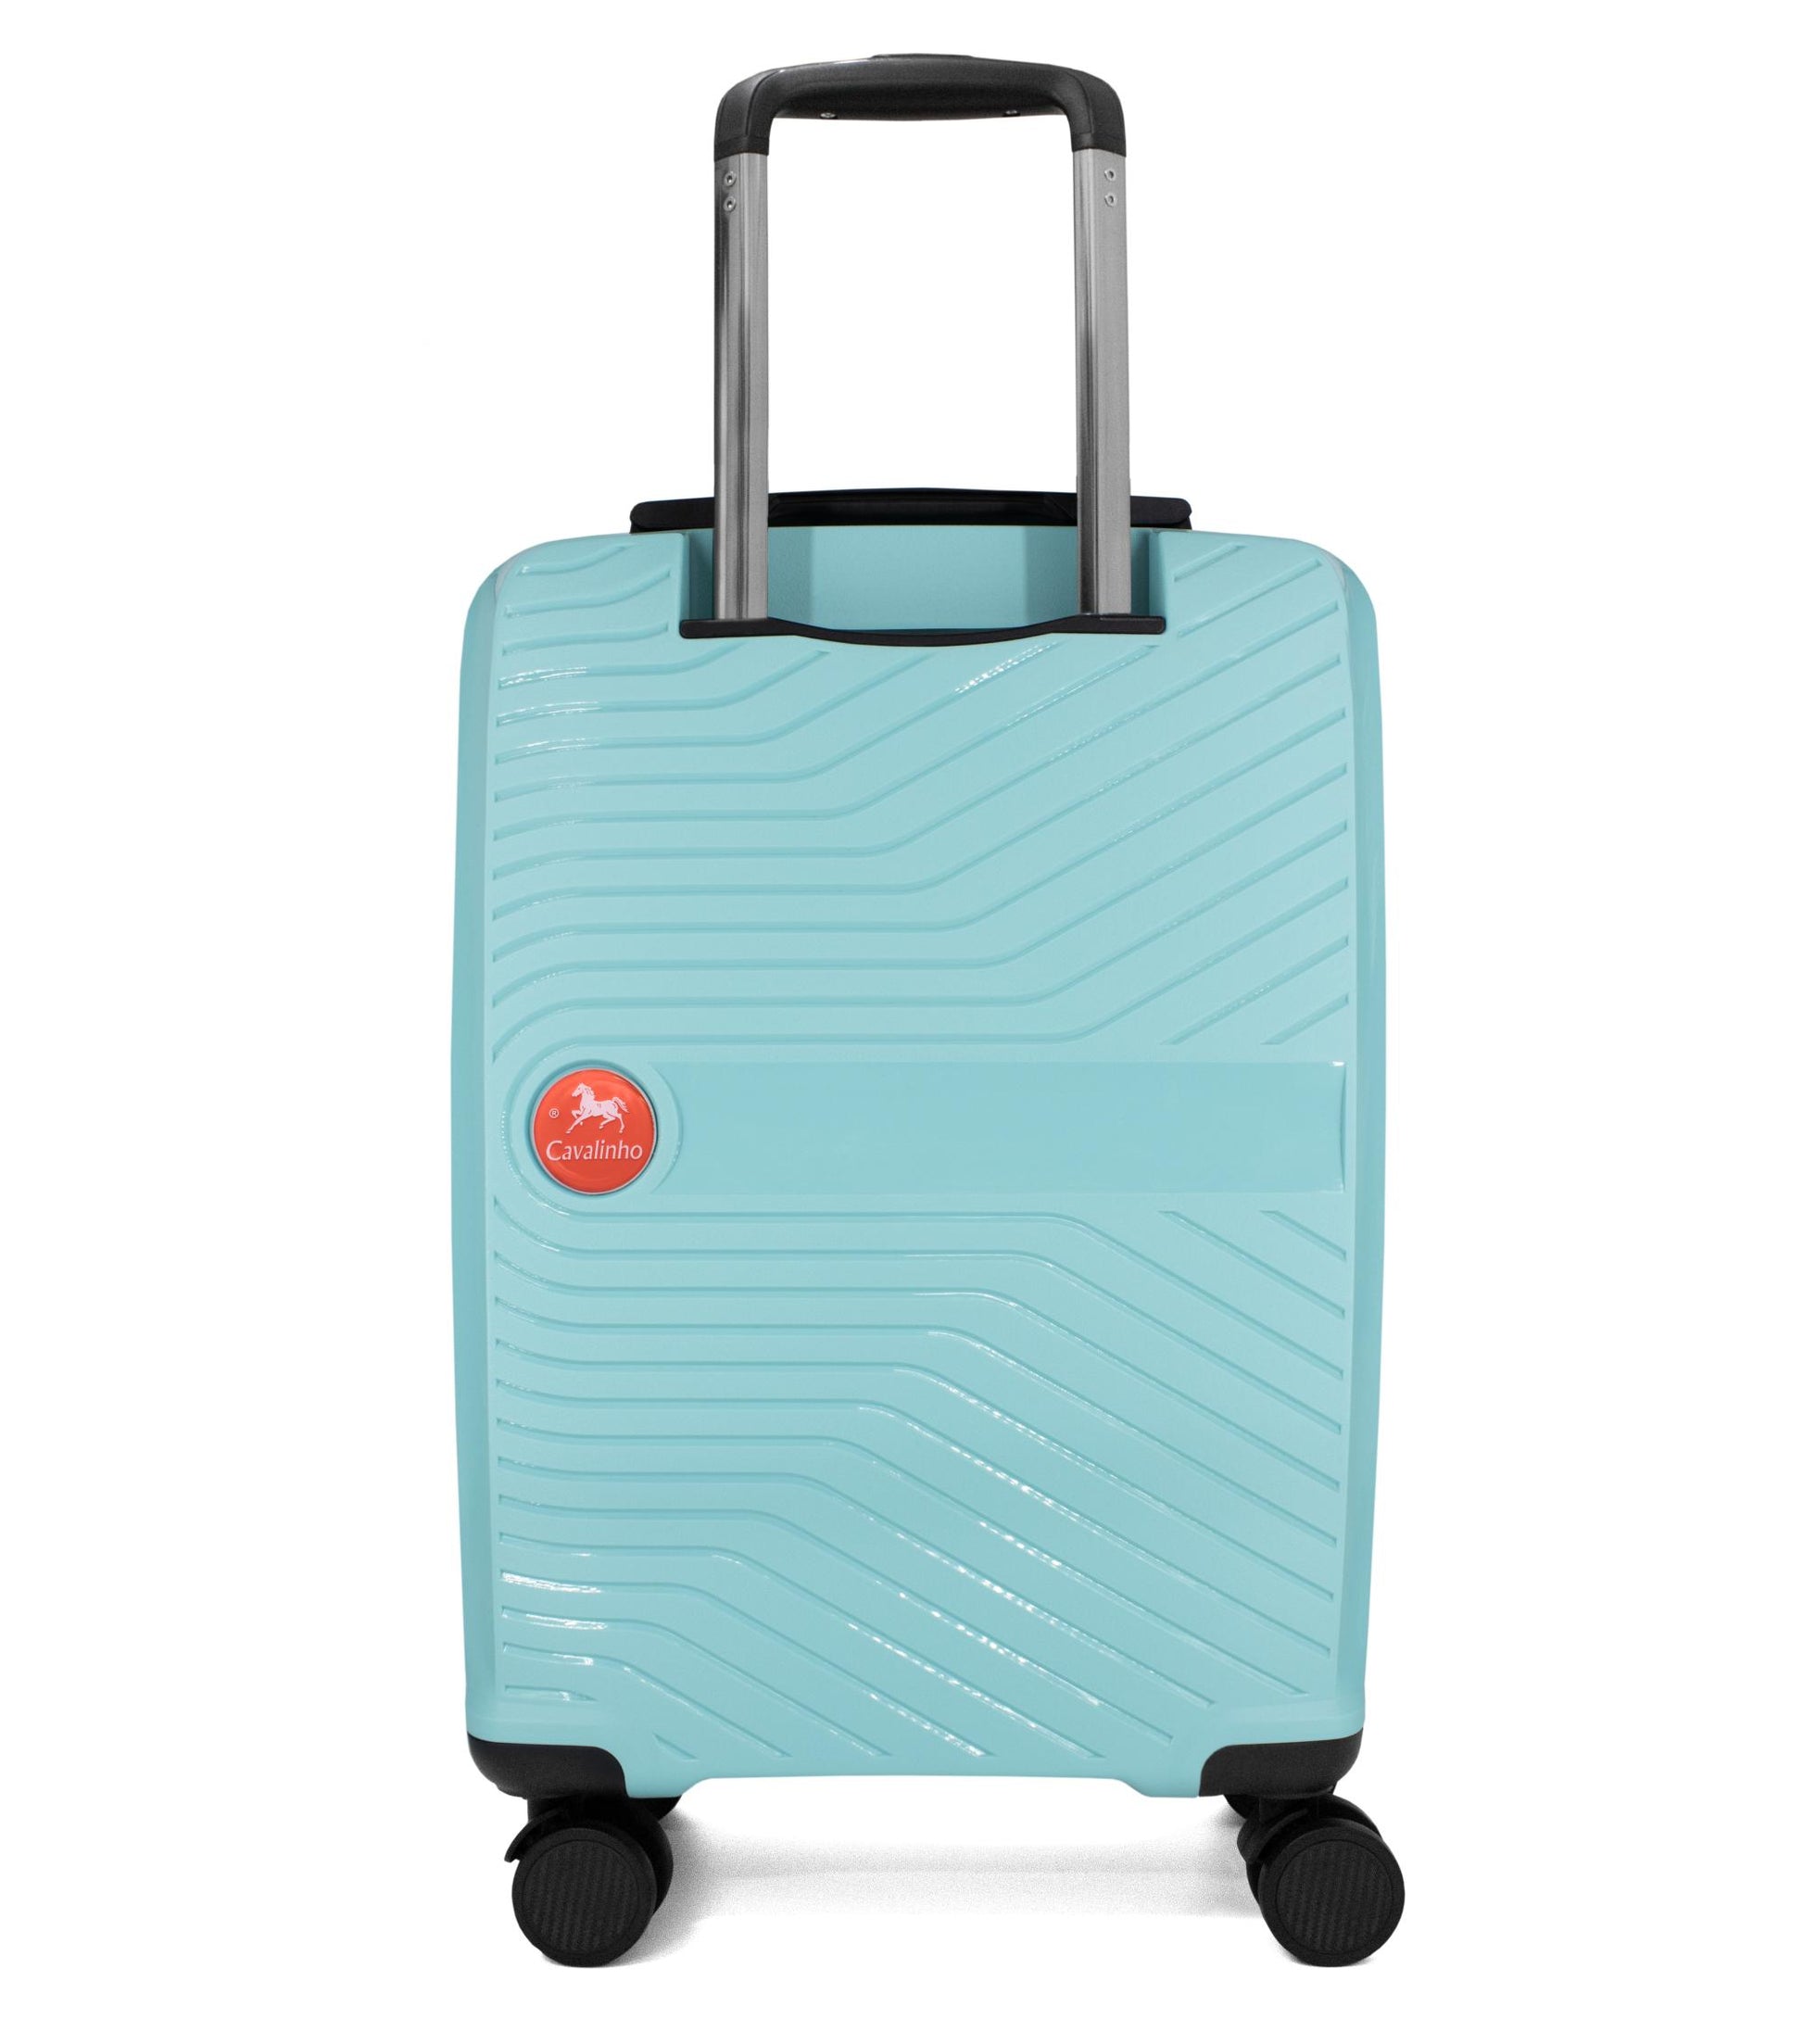 Cavalinho Colorful Carry-on Hardside Luggage (19") - 19 inch LightBlue - 68020004.10.19_4